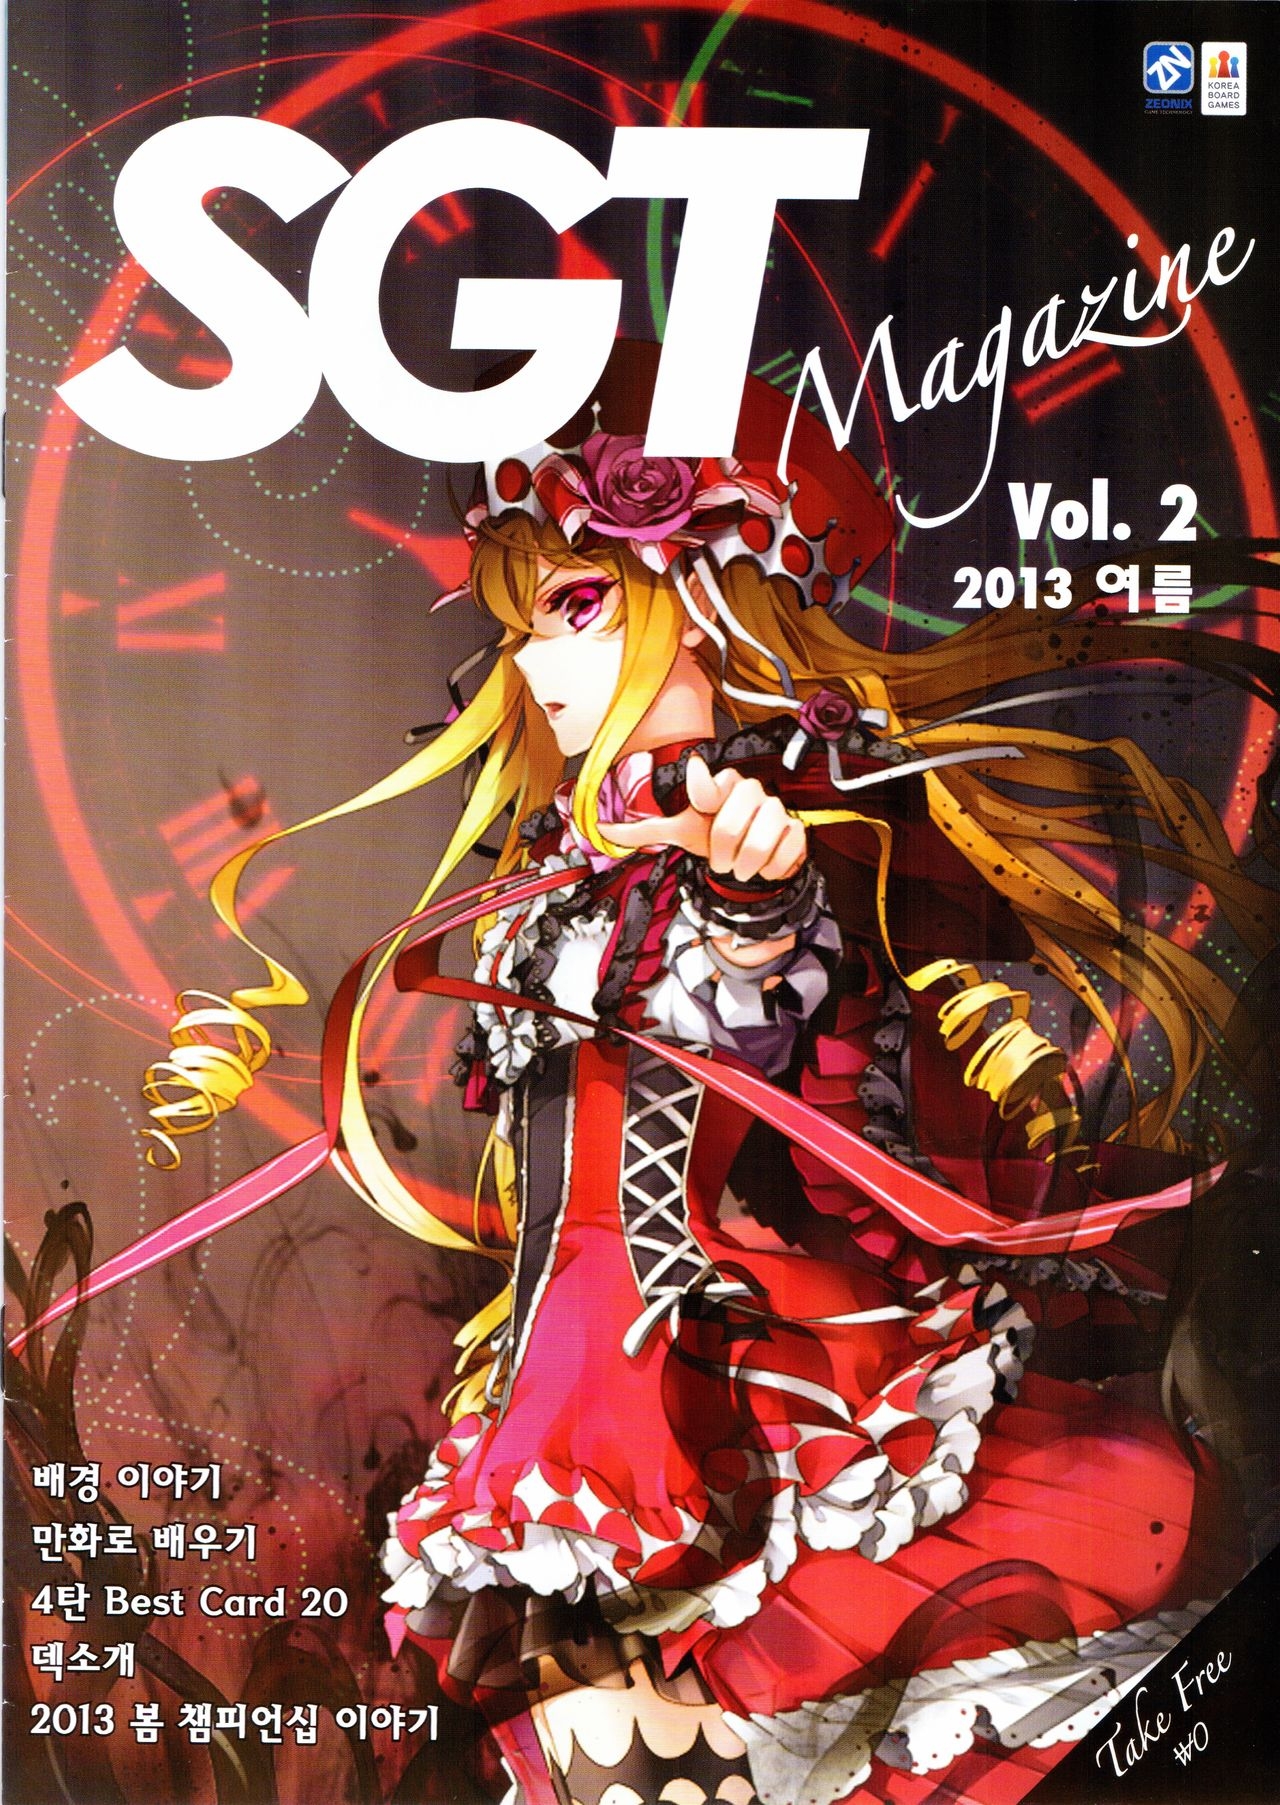 SGT Magazine #2 0